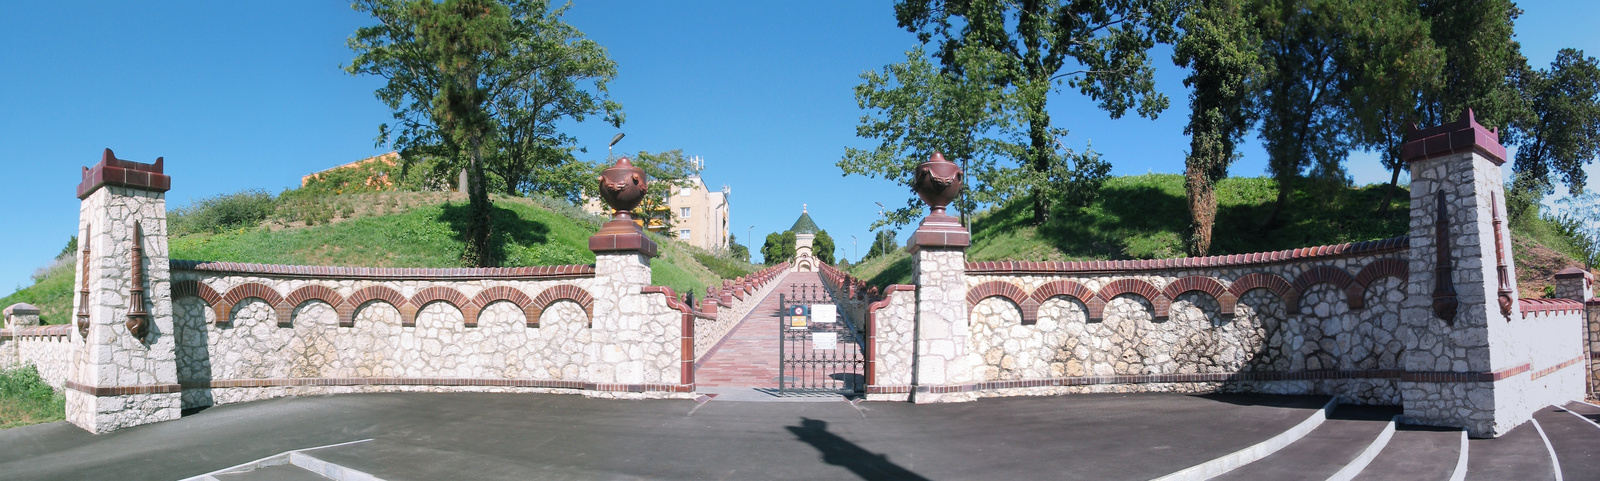 Zsolnay mauzóleum bejárata